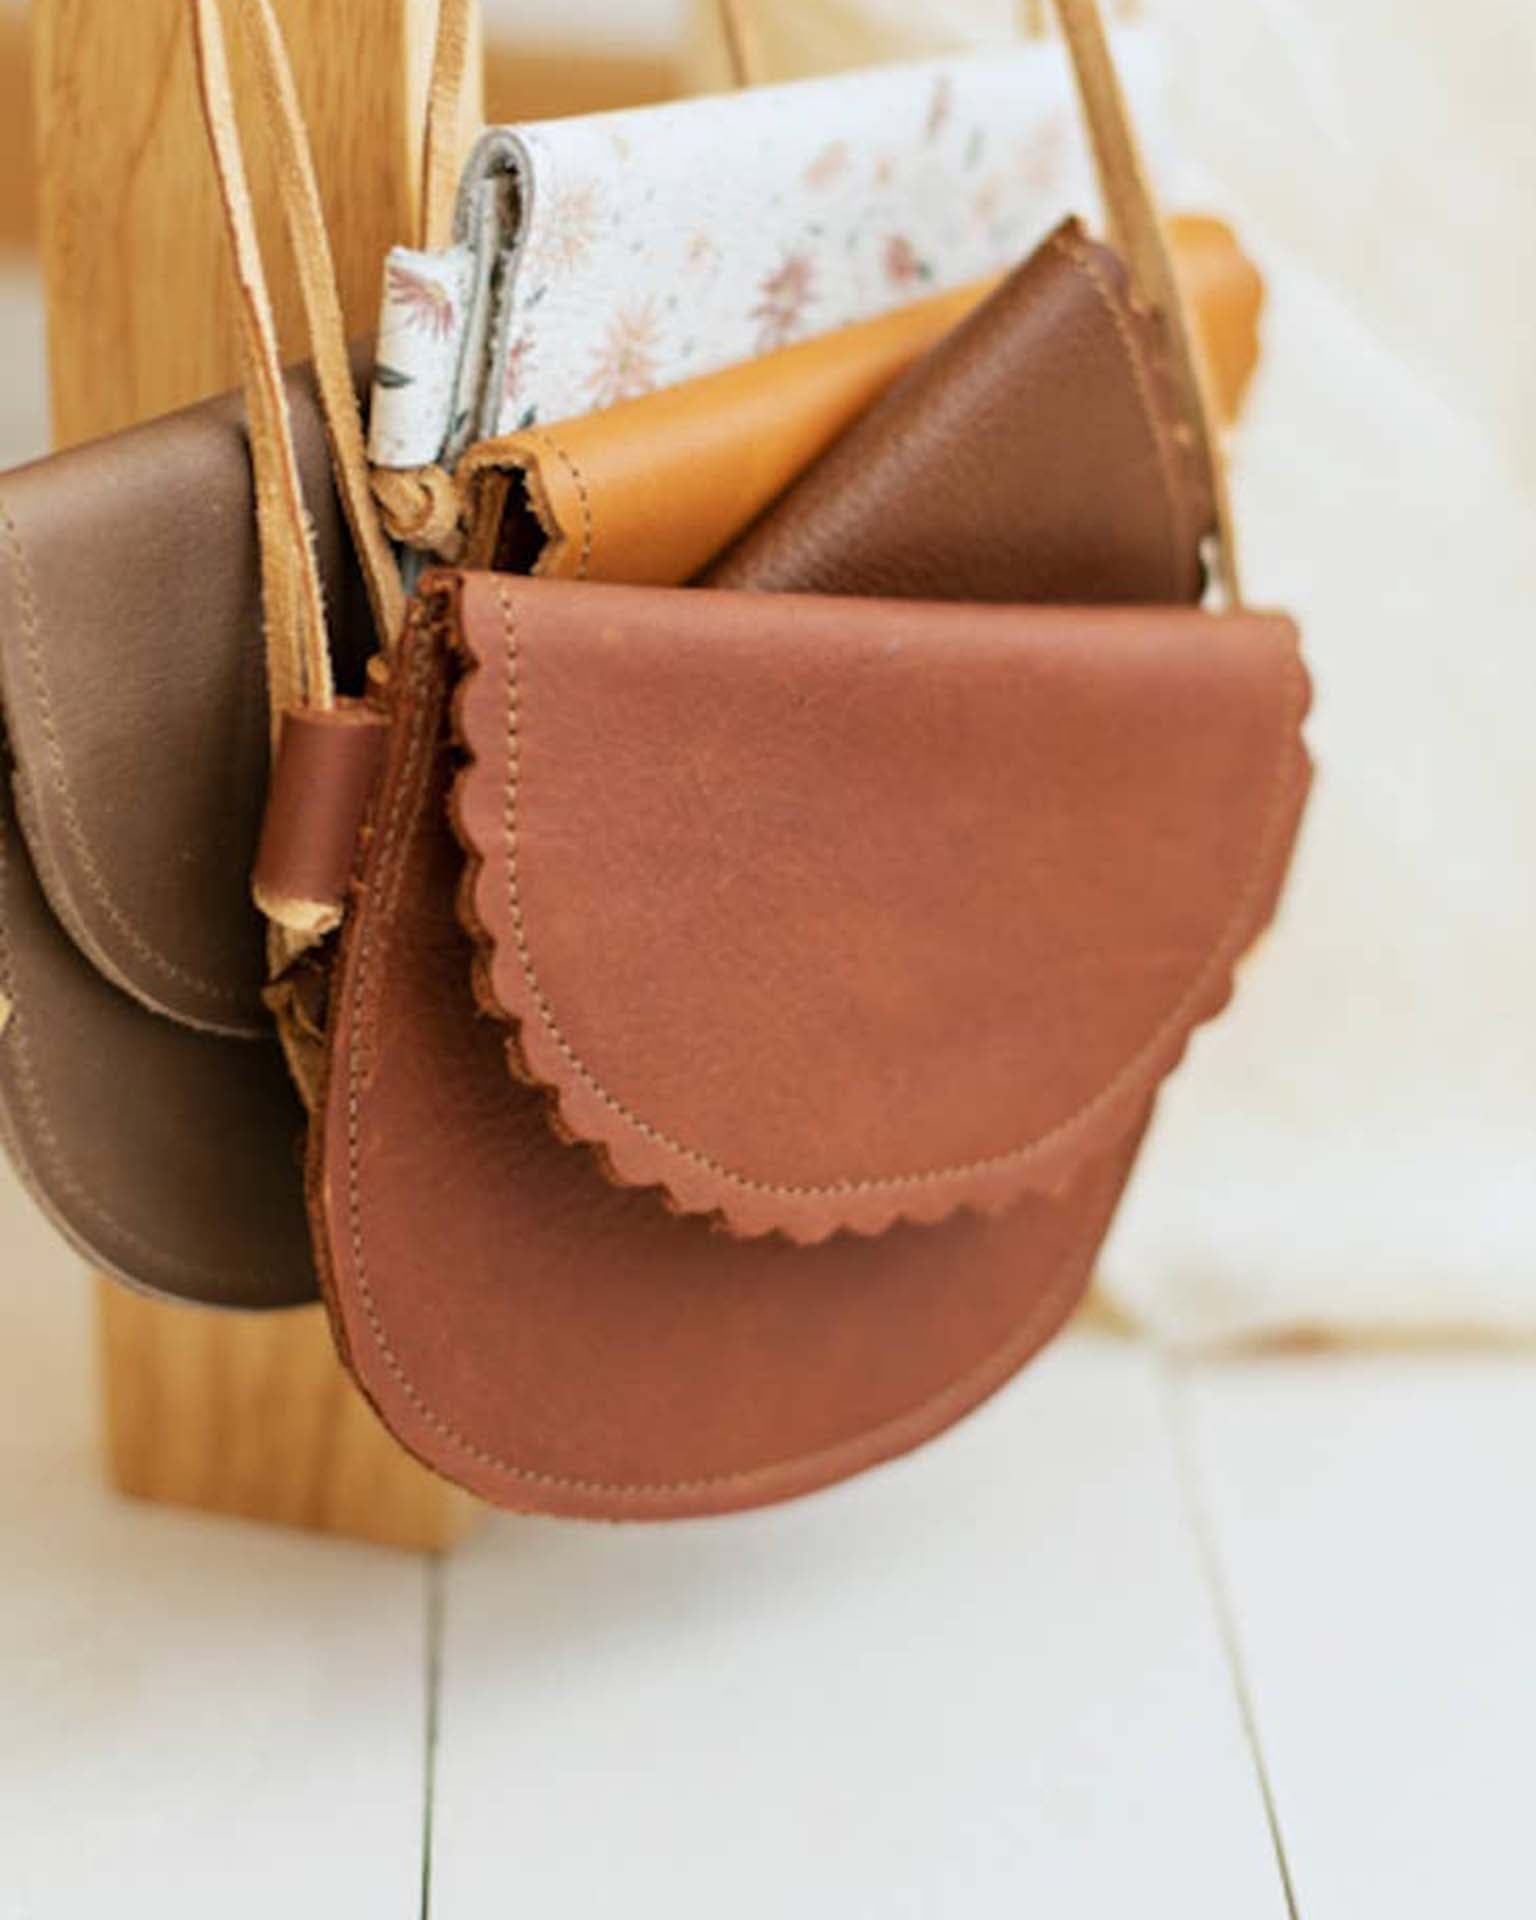 Bag hardware accessories | Leather bag pattern, Handbag hardware, Leather  bags handmade